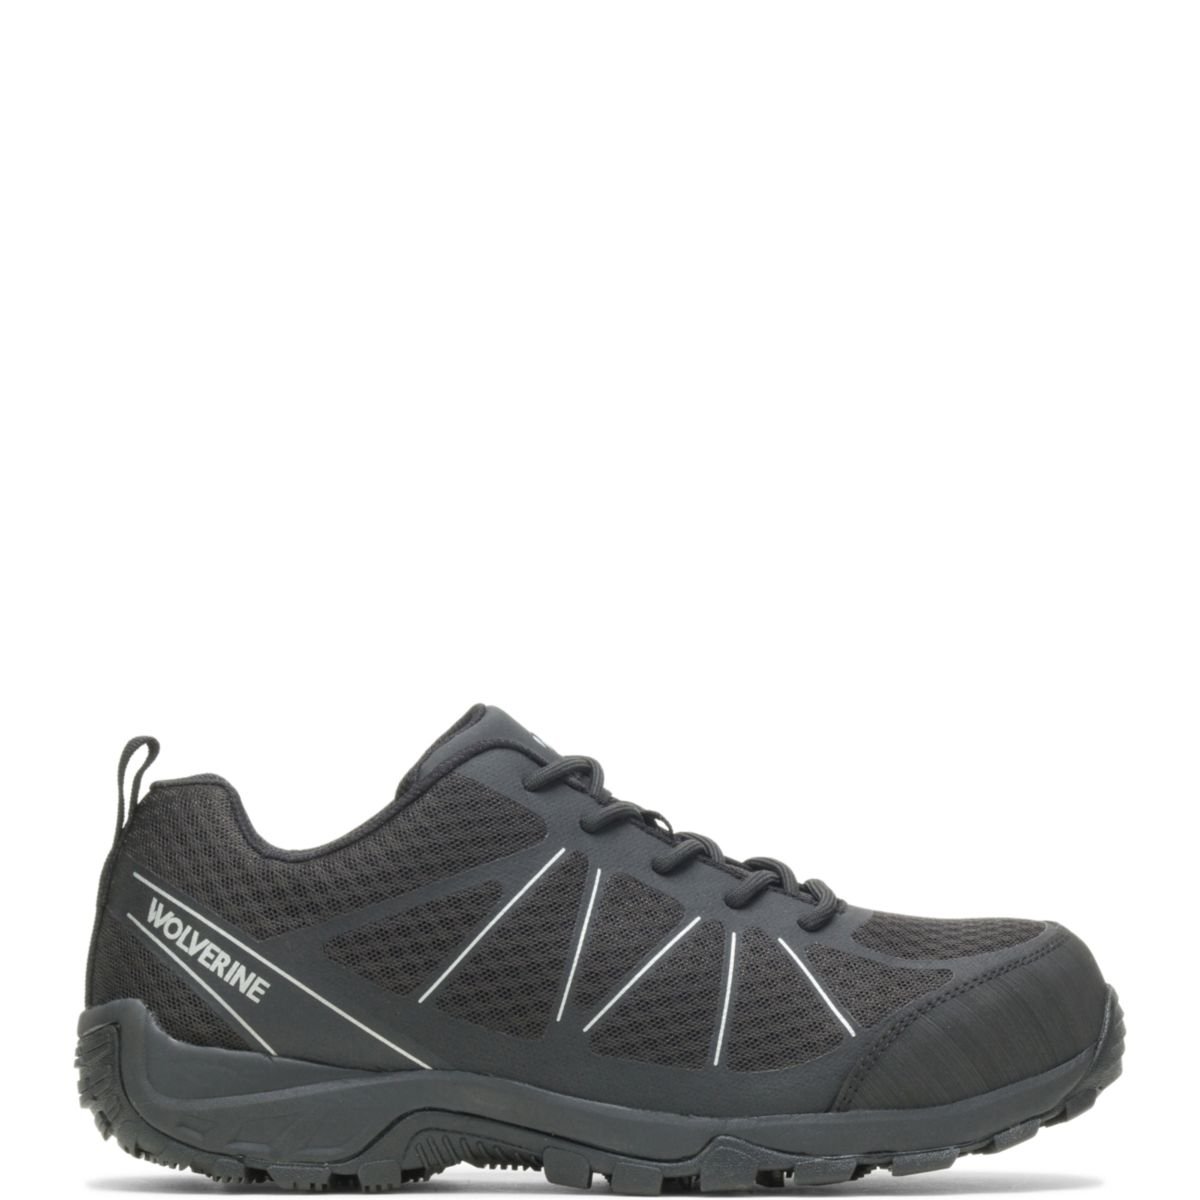 WOLVERINE Men's Amherst II CarbonMAXÂ® Composite Toe Work Shoe Black - W201147 BLACK - BLACK, 12